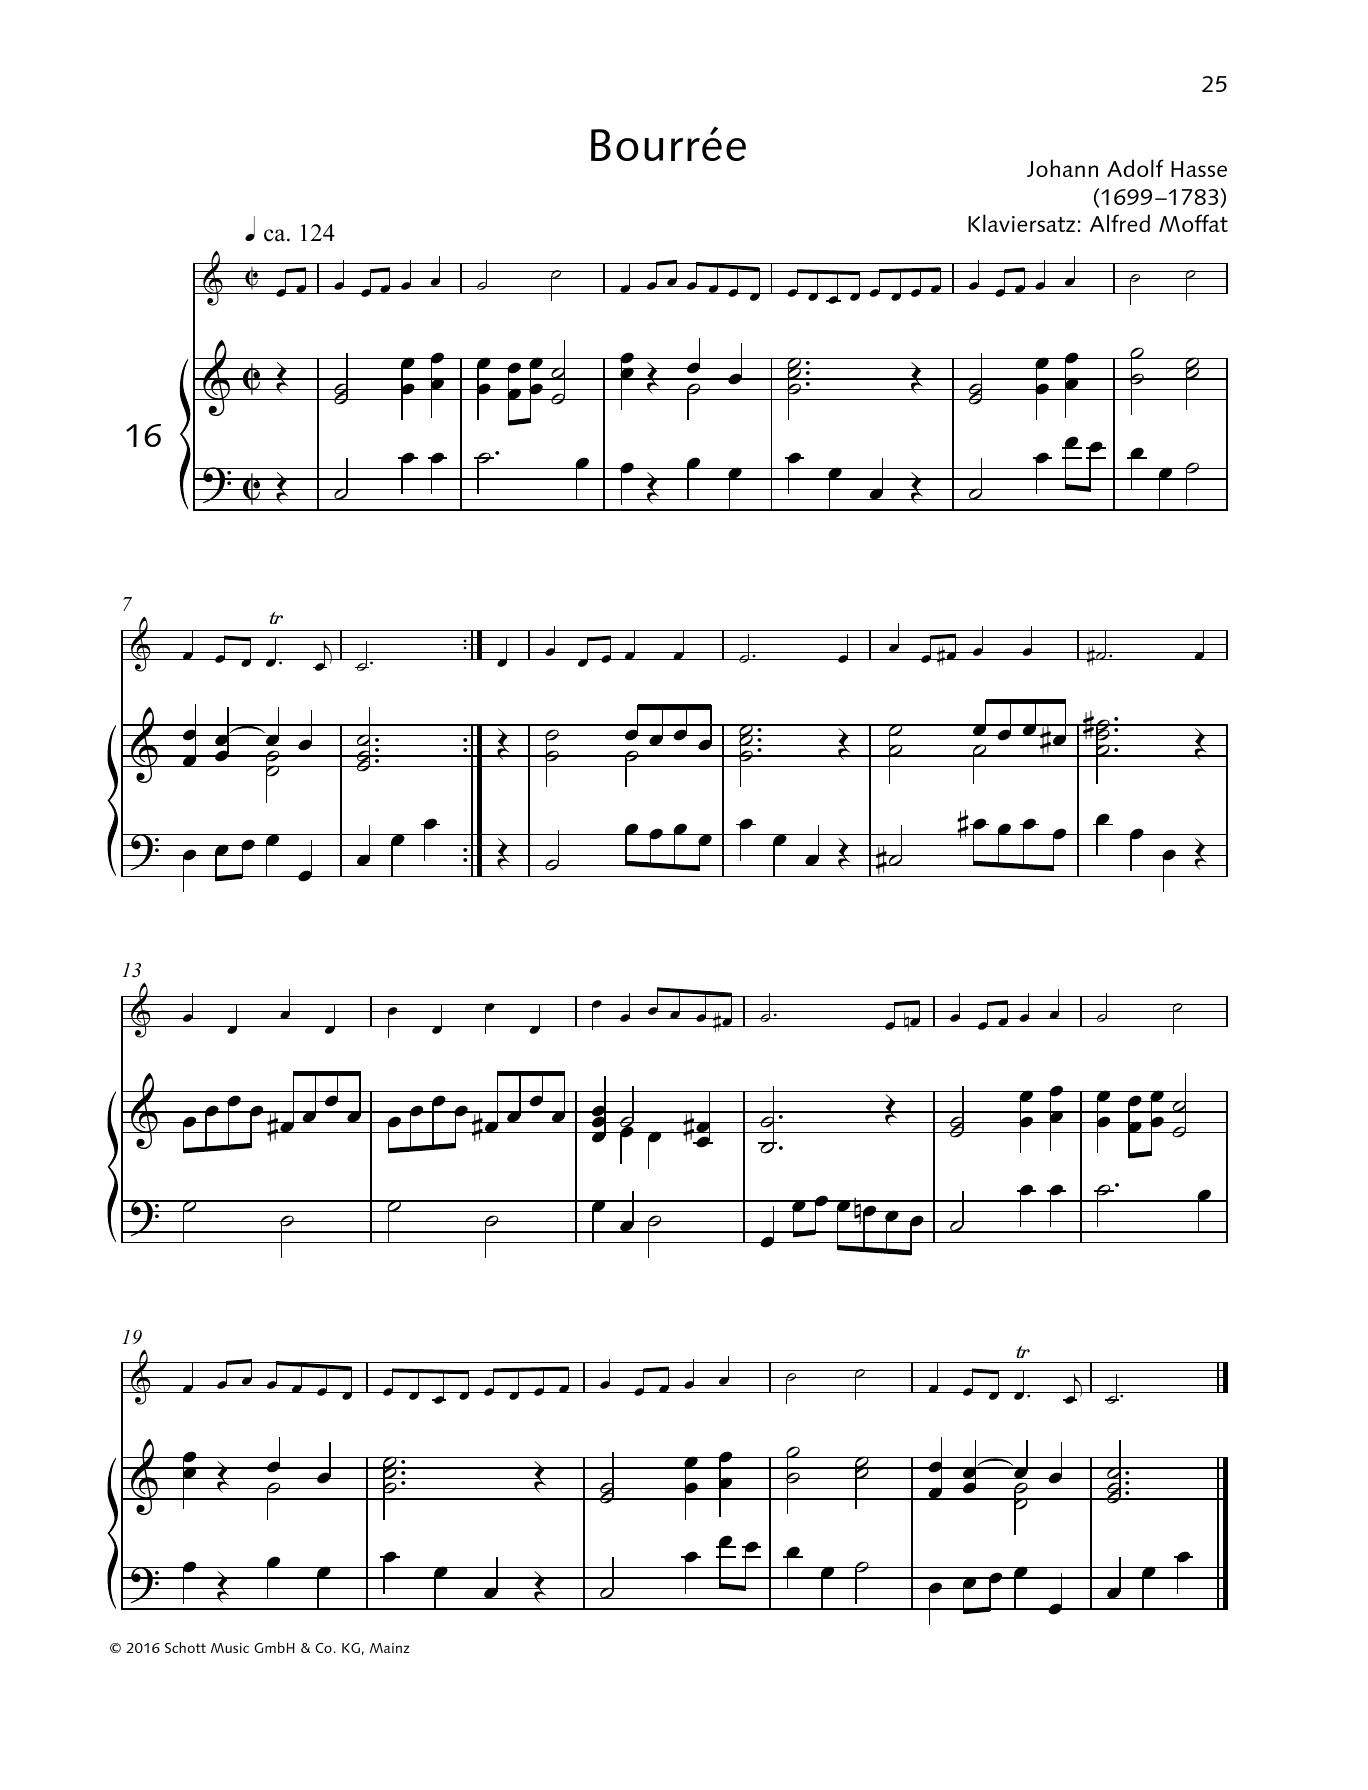 Elisabeth Kretschmann Bourree Sheet Music Notes & Chords for Woodwind Solo - Download or Print PDF